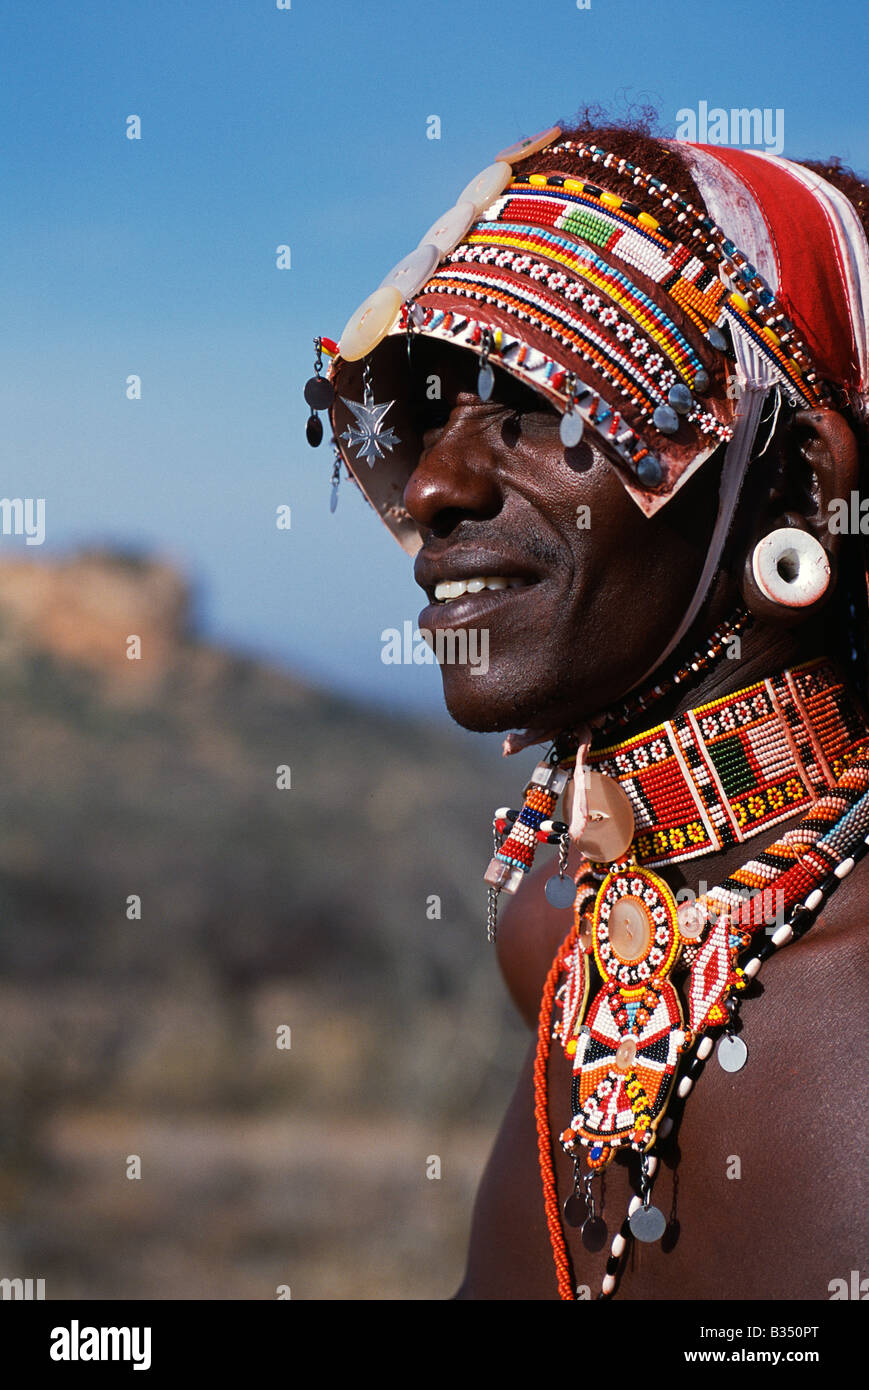 Kenya, Samburu. Elaborate headdress and body adornments worn by Samburu moran (warrior). Stock Photo